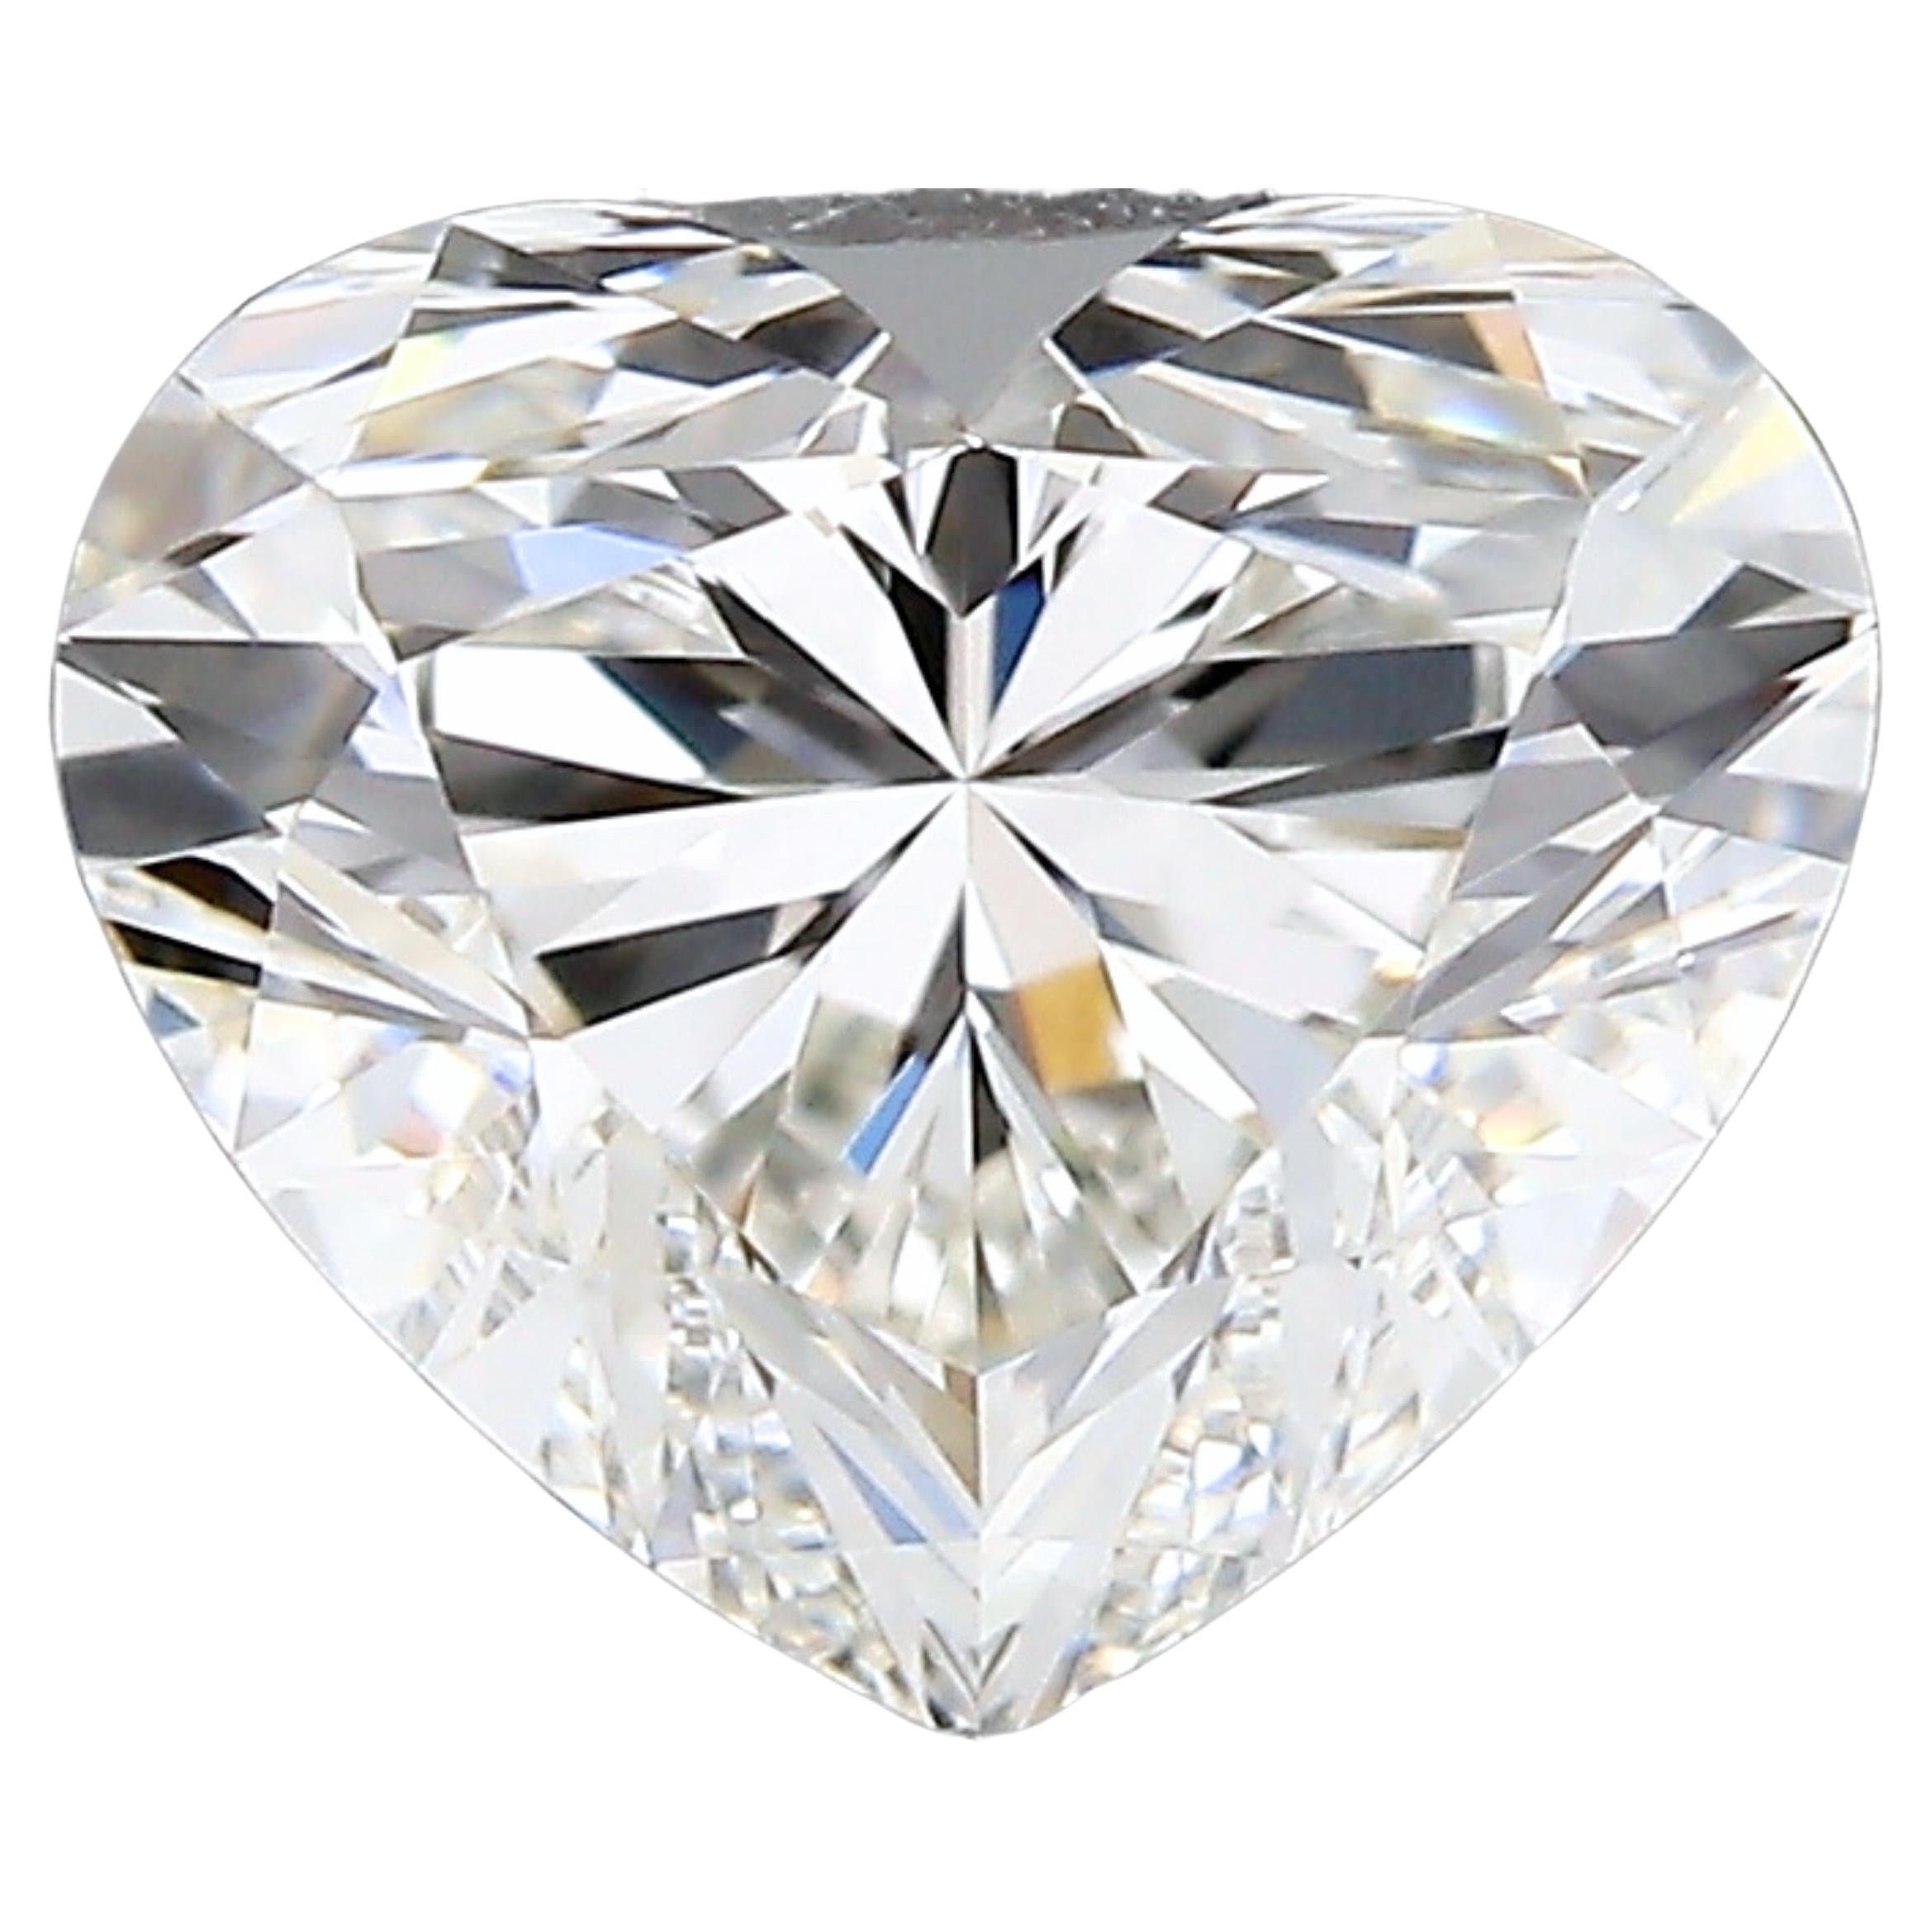 Captivating 1 carat Heart Cut Brilliant Diamond For Sale